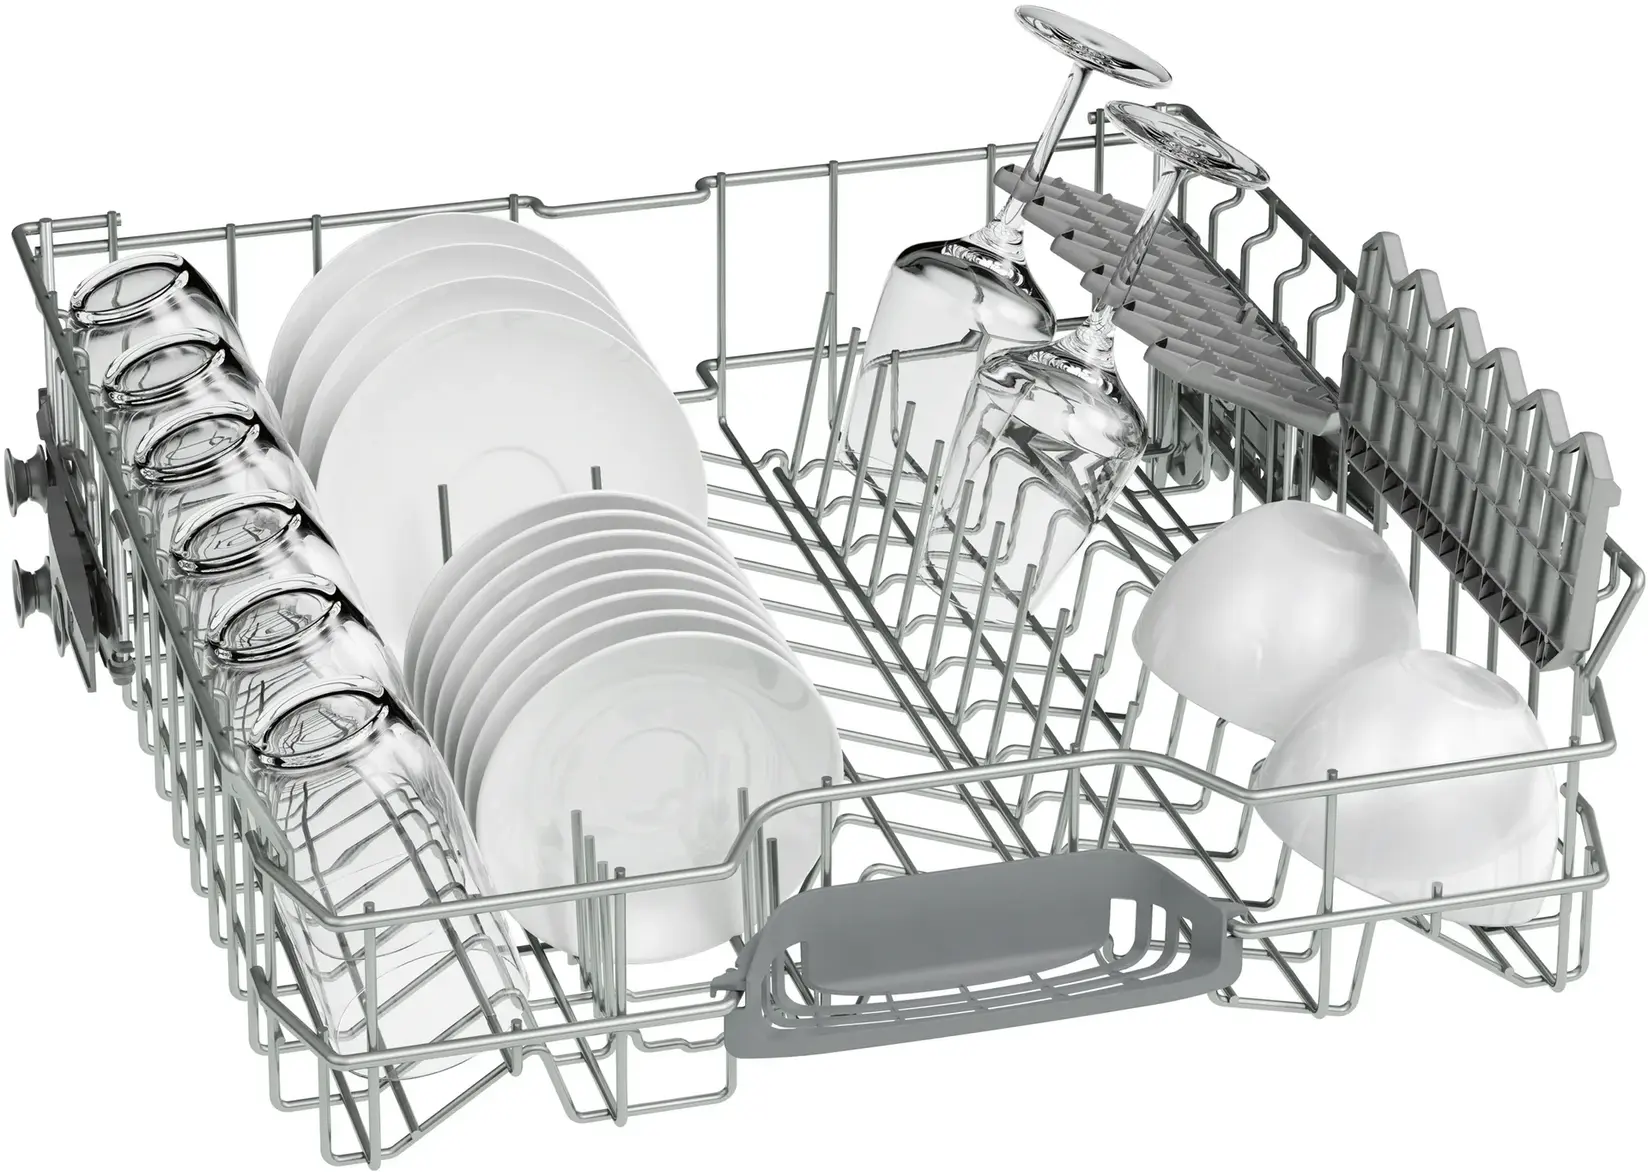 Selected image for BOSCH Ugradna mašina za pranje sudova Polinox SMV25EX02E 60cm bela